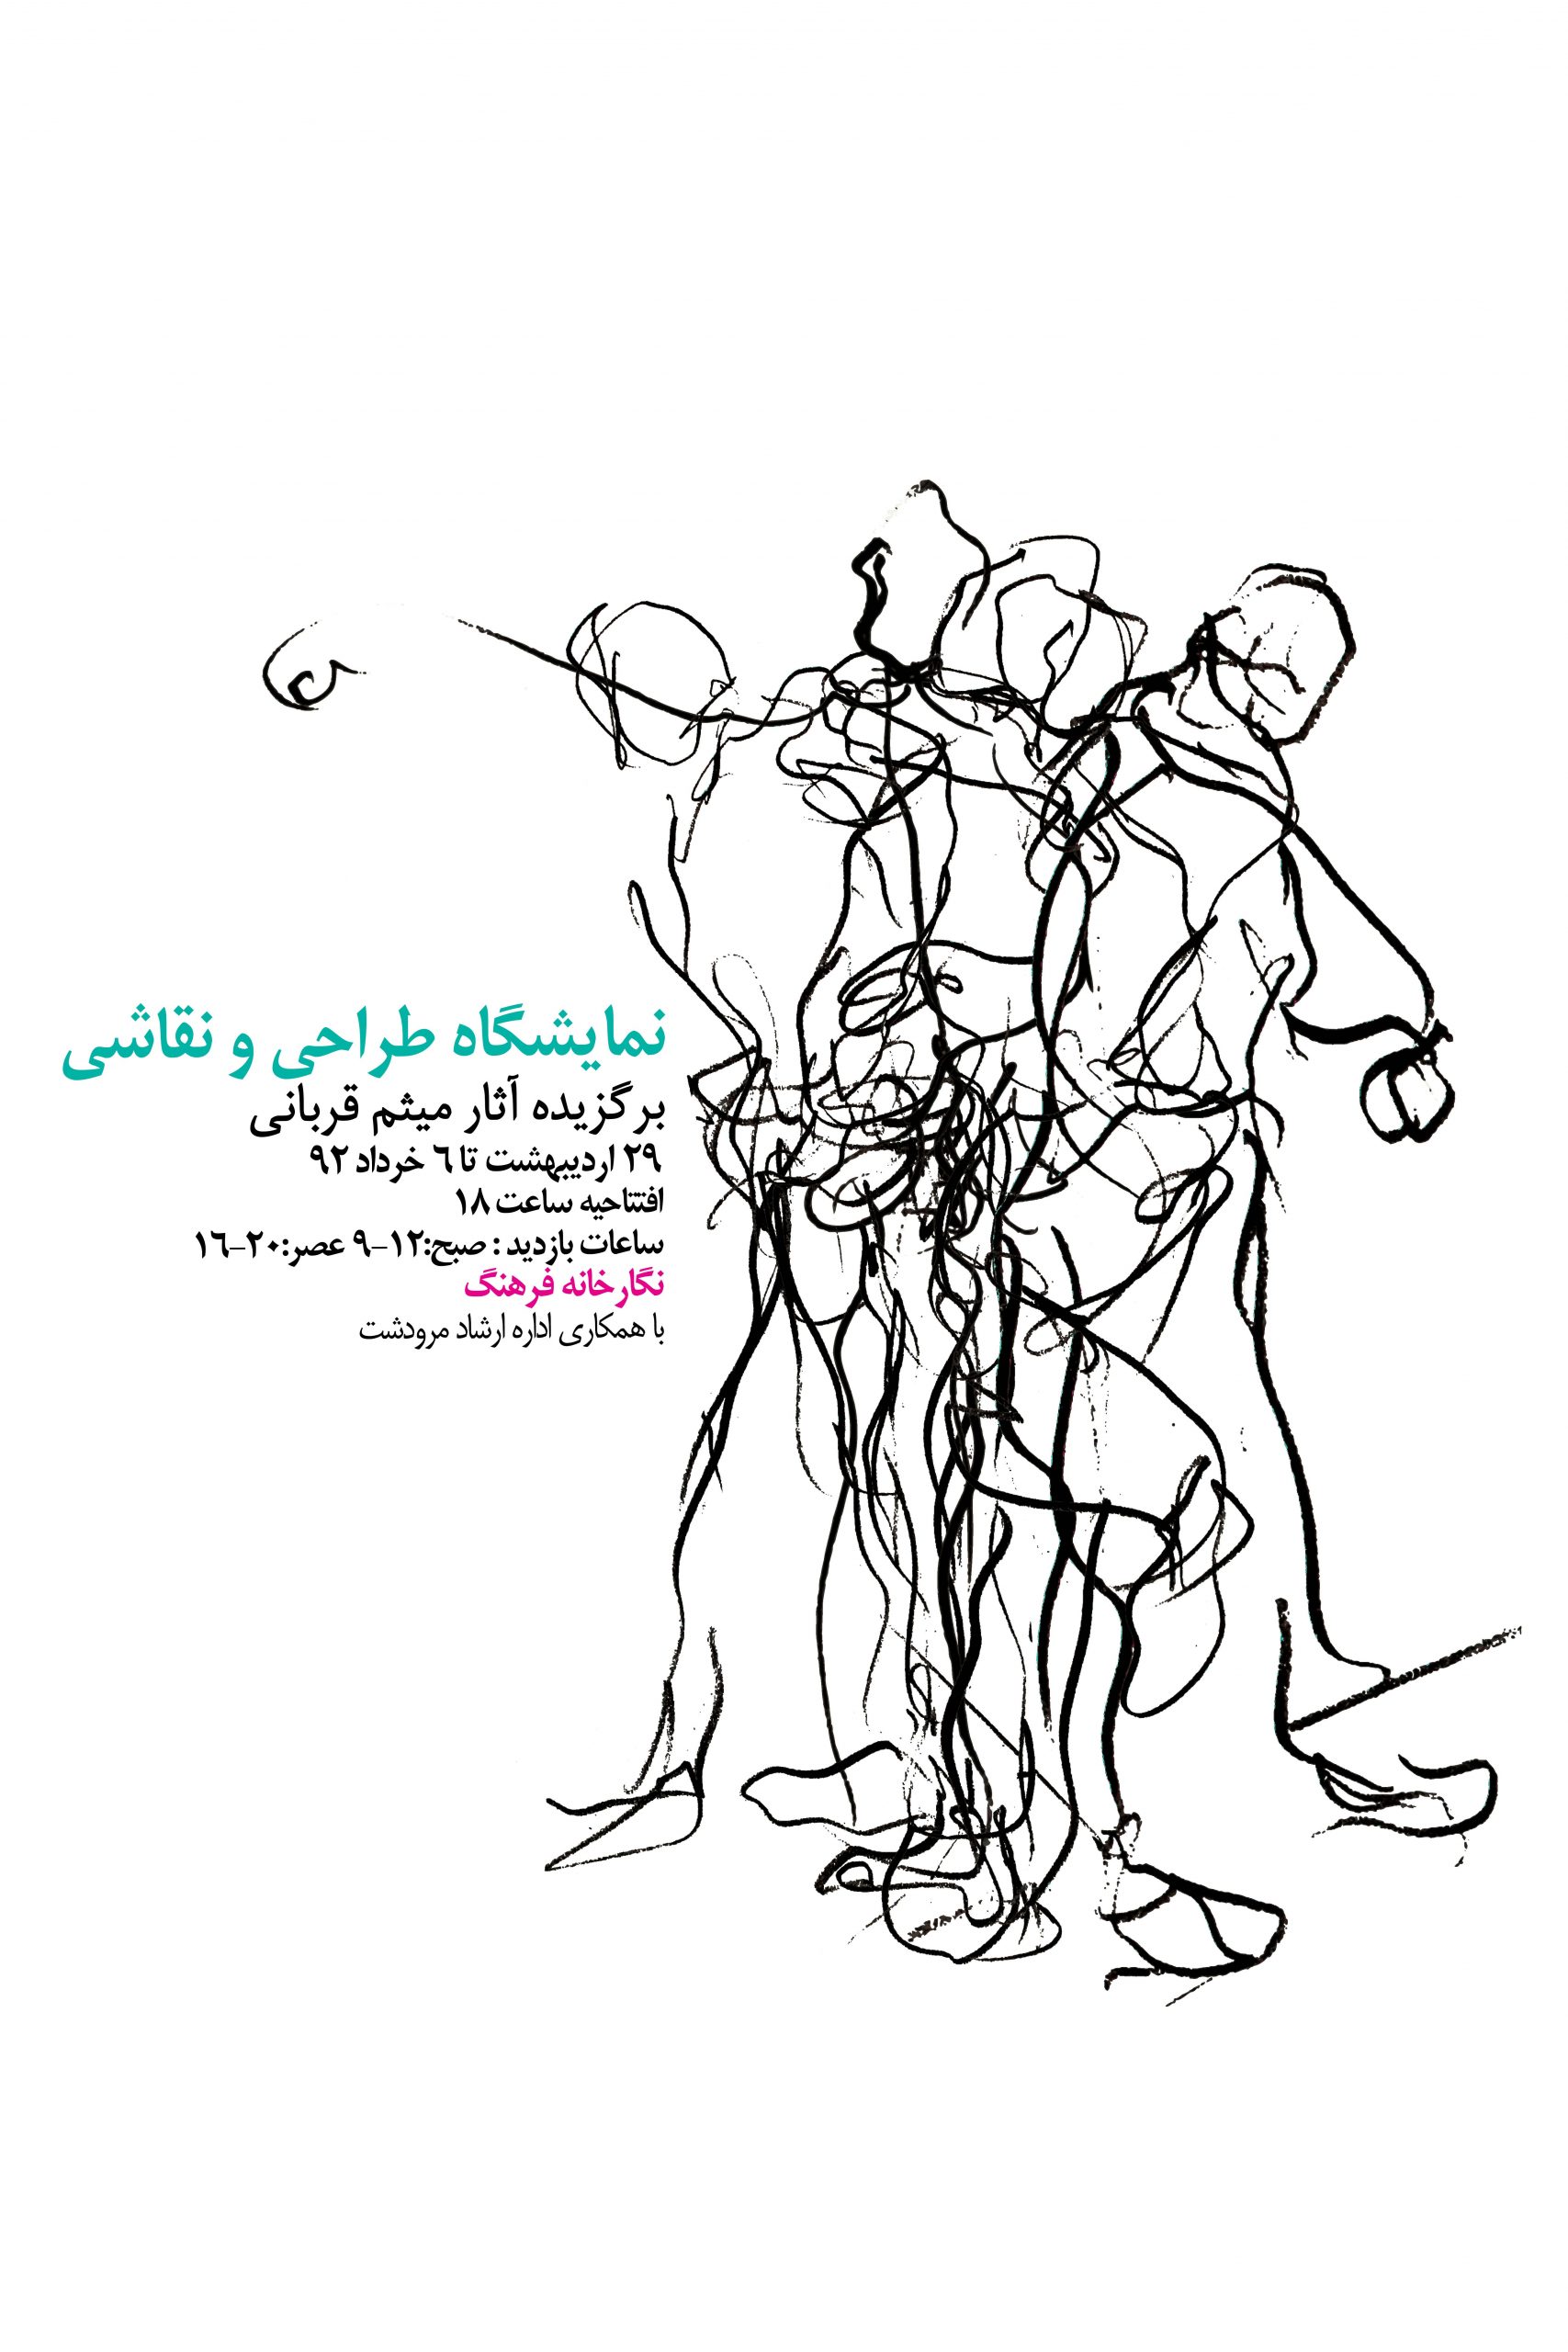 پوستر نمایشگاه meysam qorbani's exhibition poster online drawing and painting classes are available